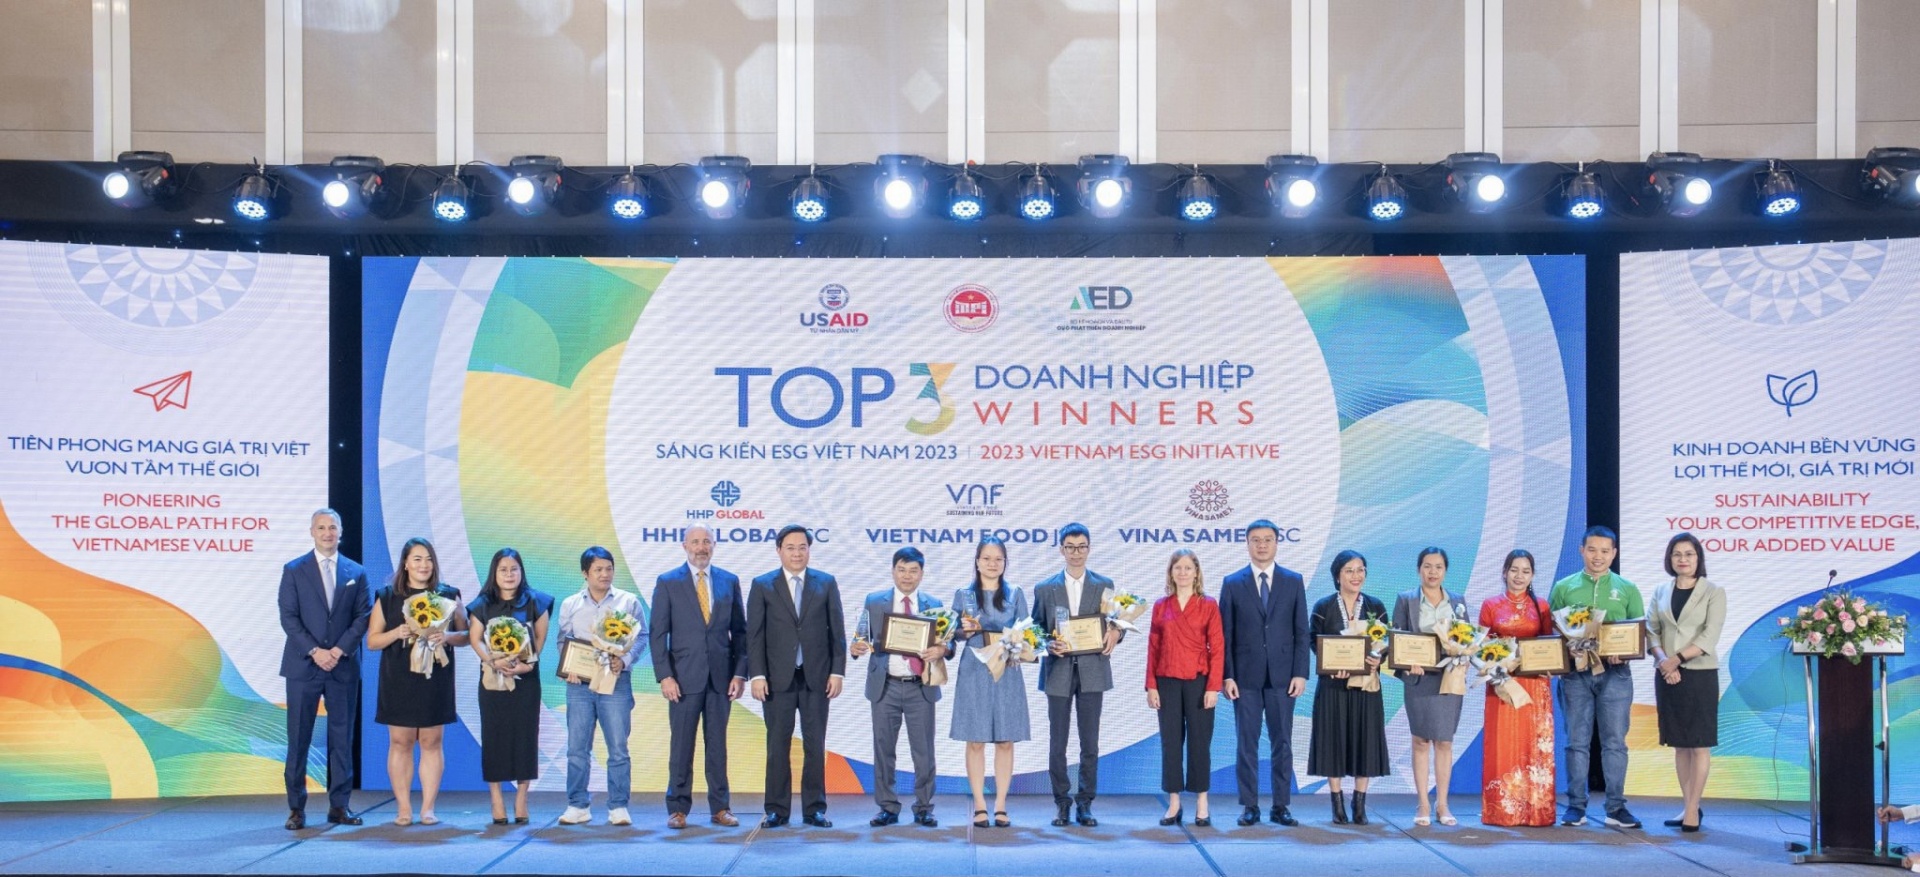 Vietnam ESG Initiative 2023 winners